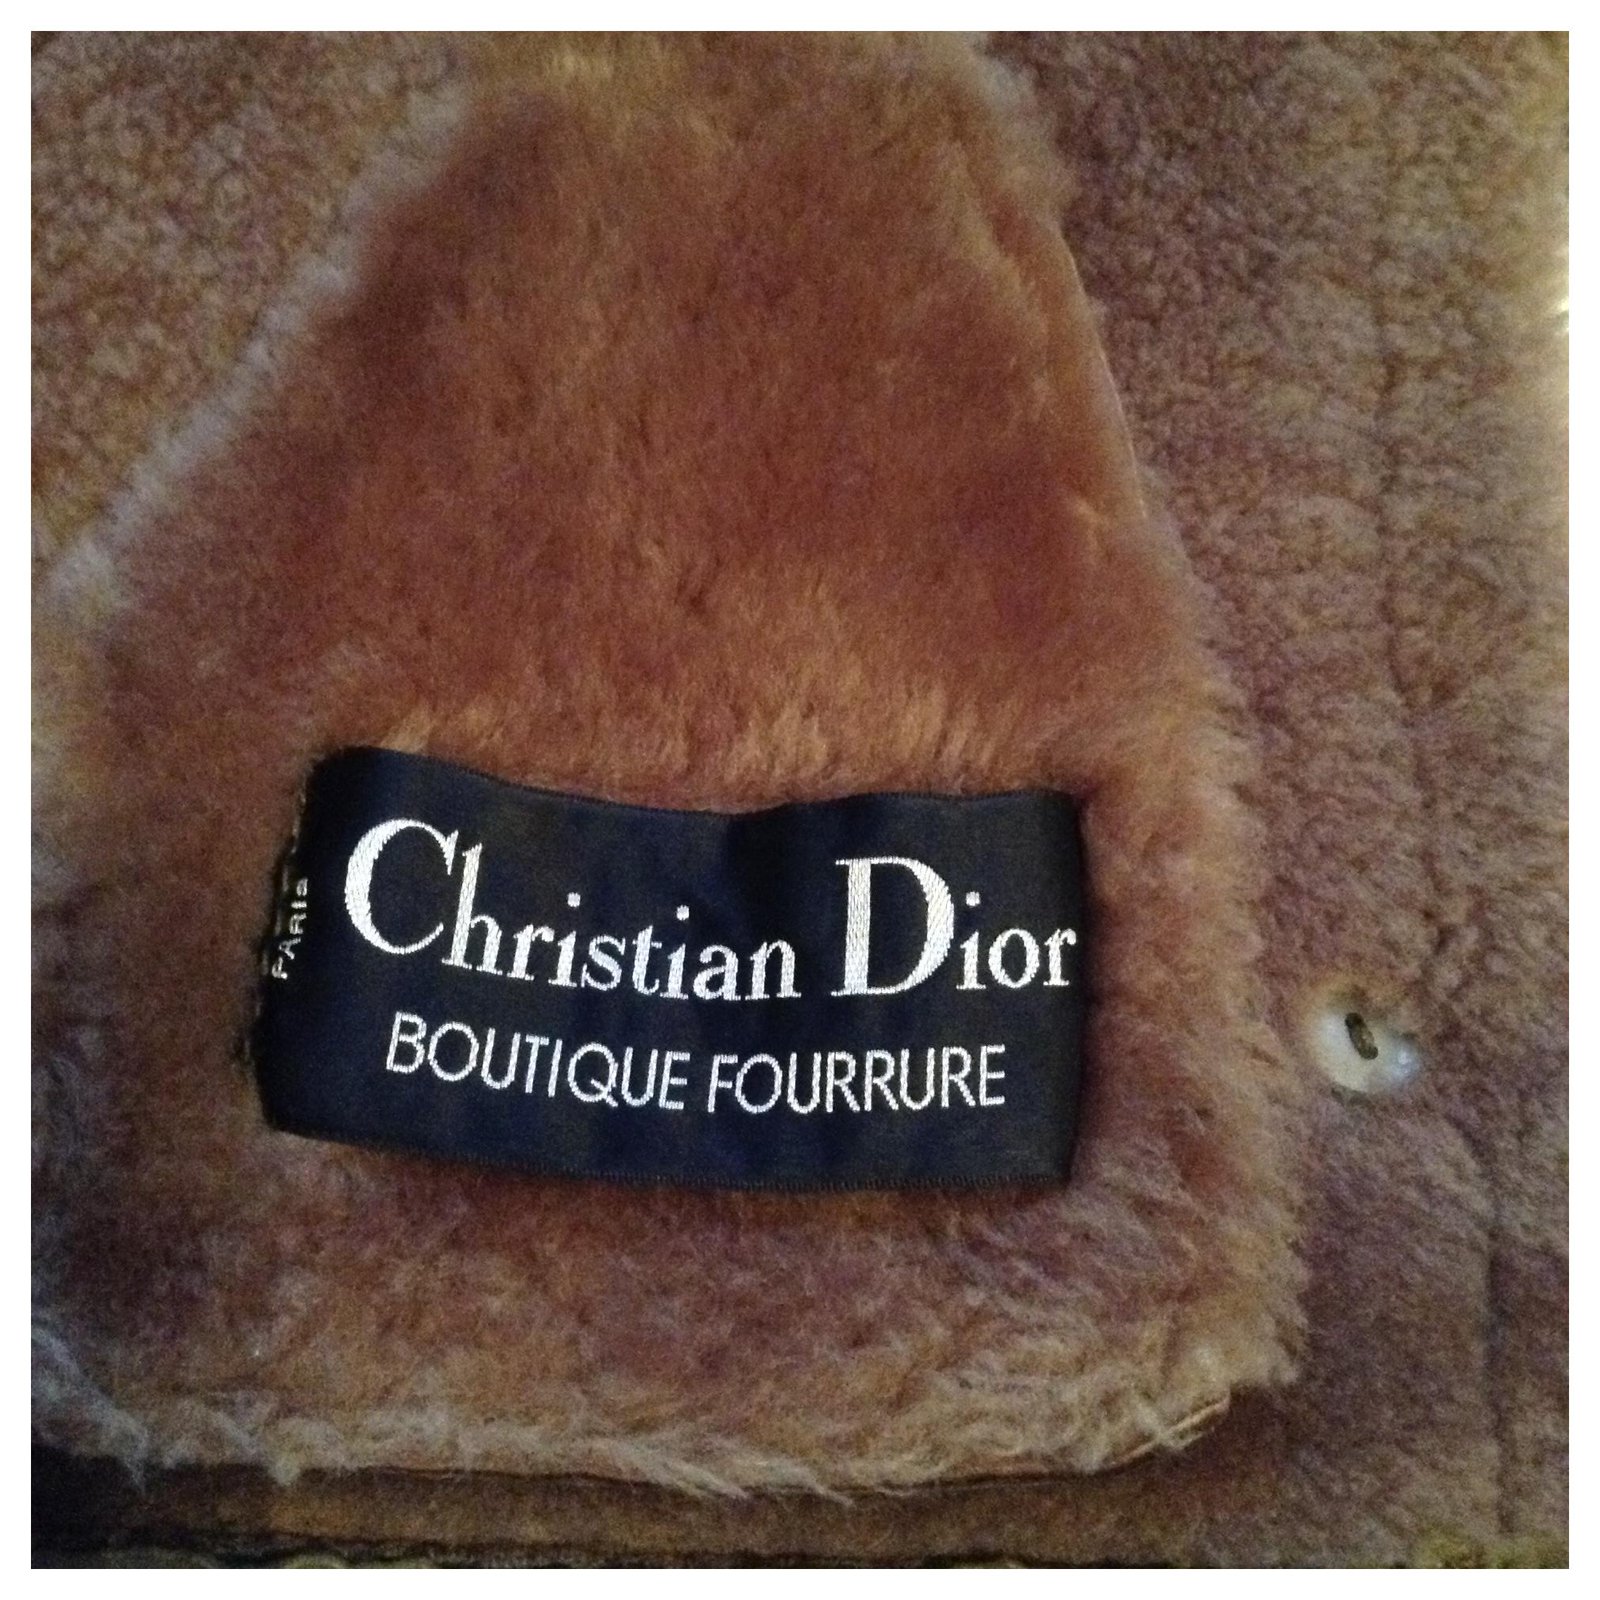 christian dior boutique fourrure